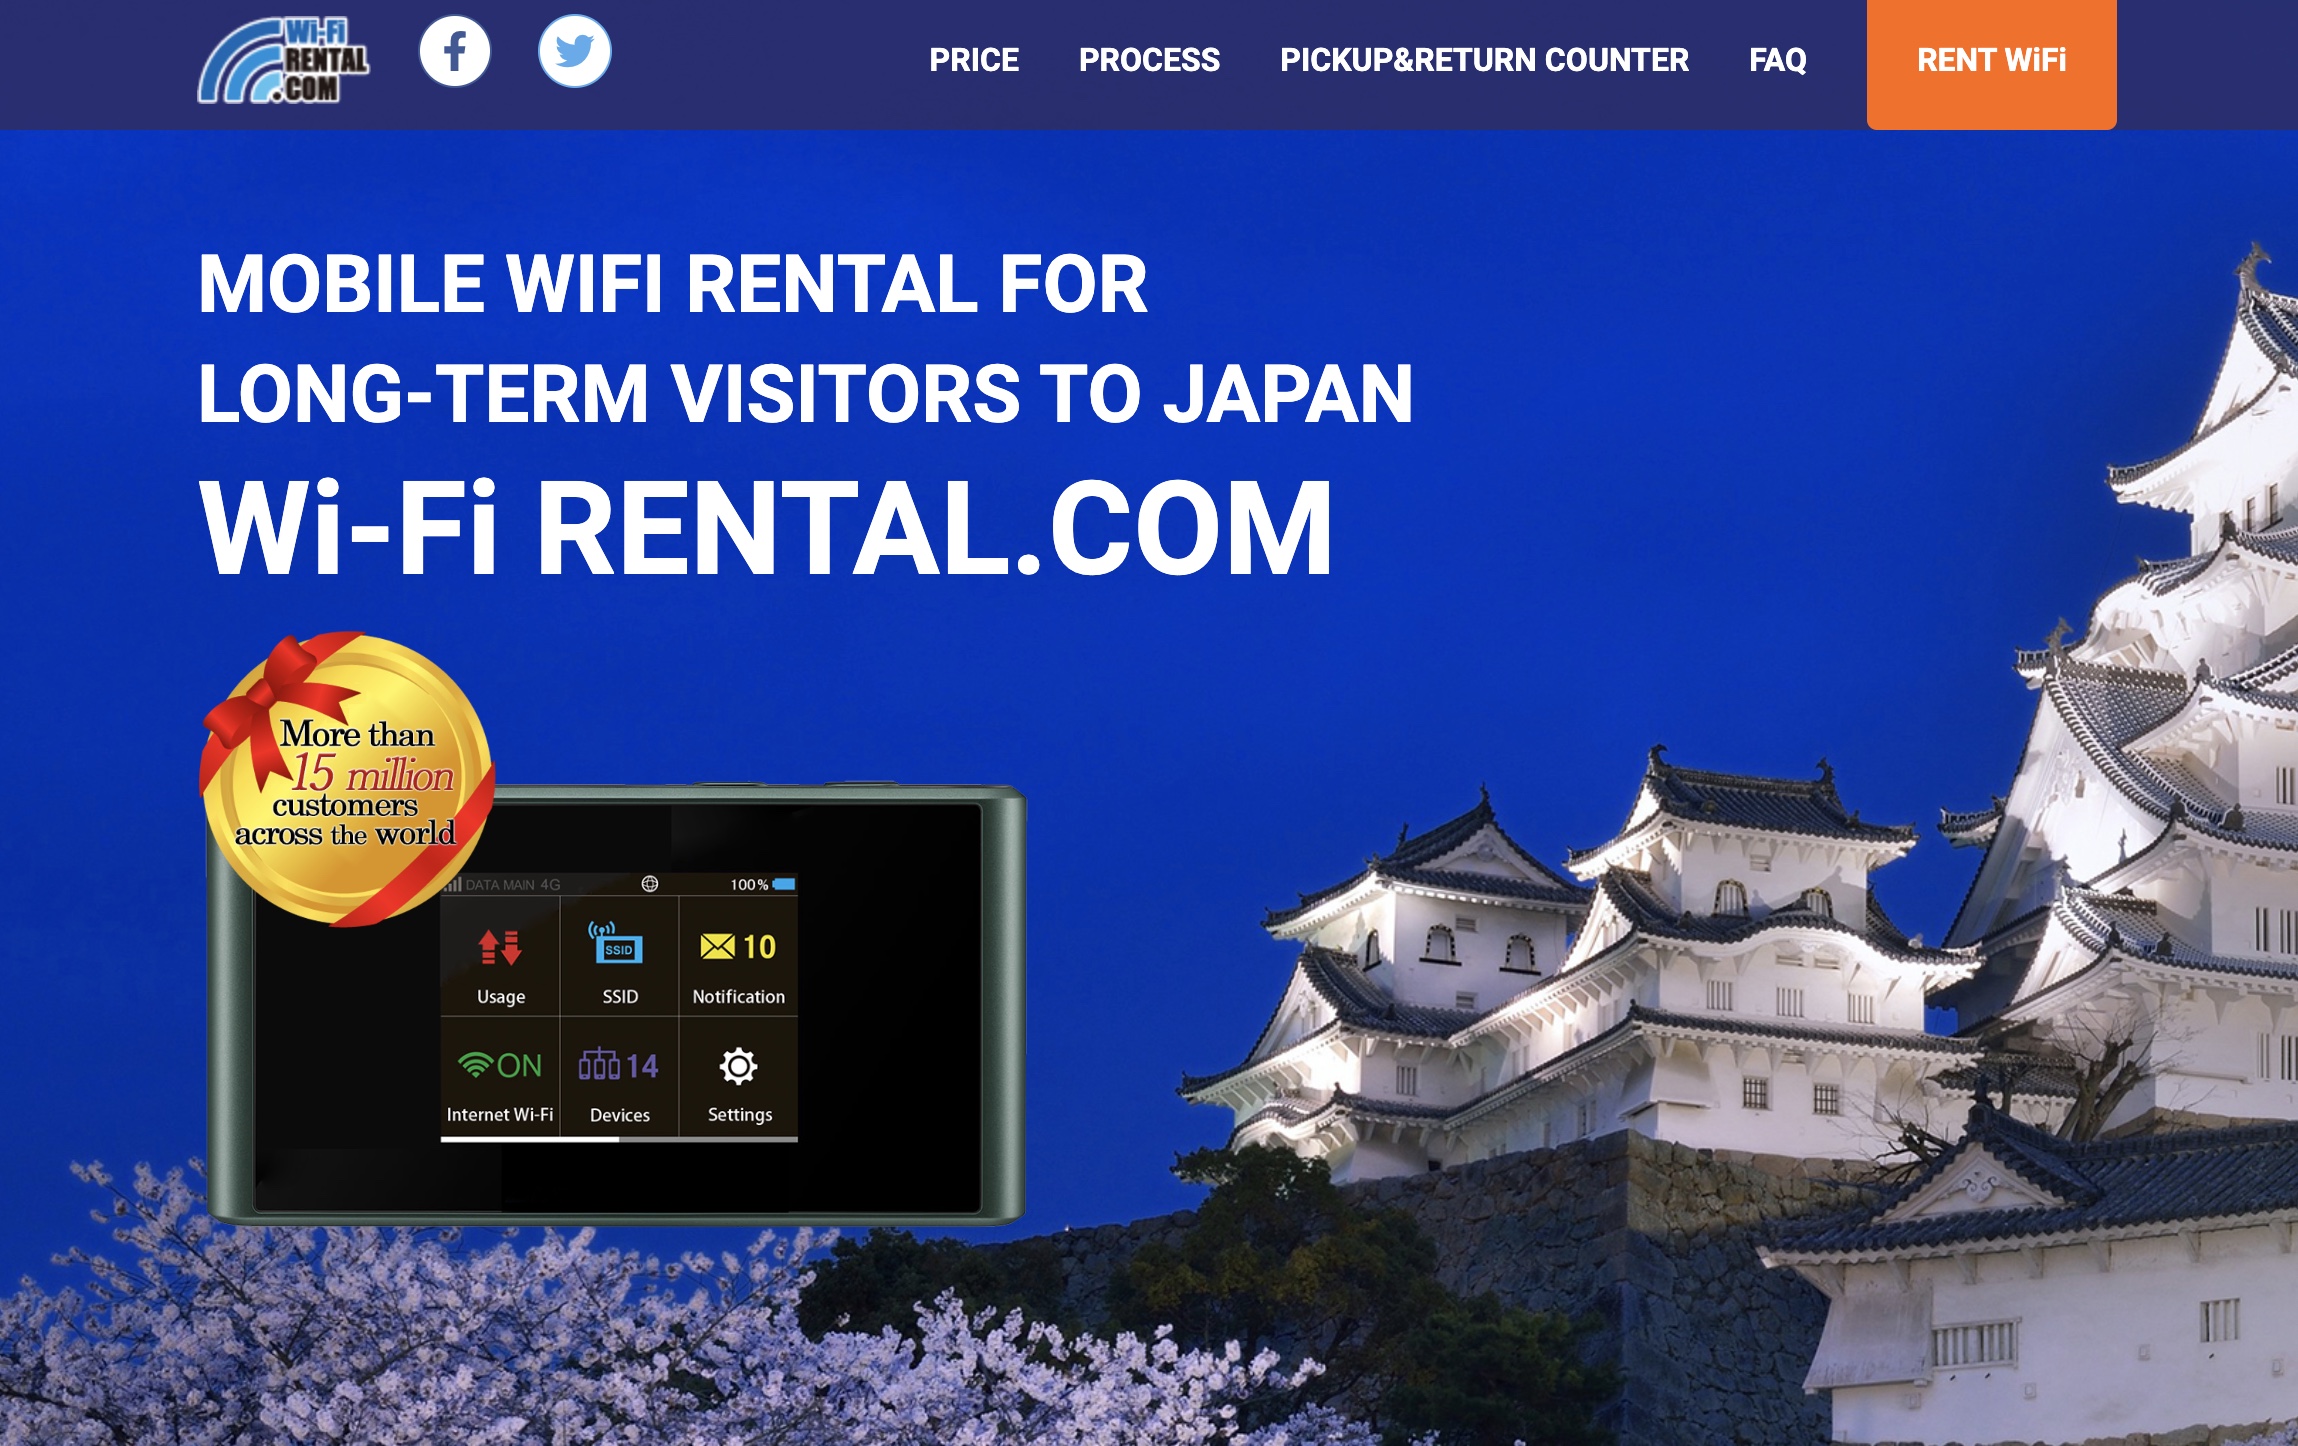 WiFi Rental.com